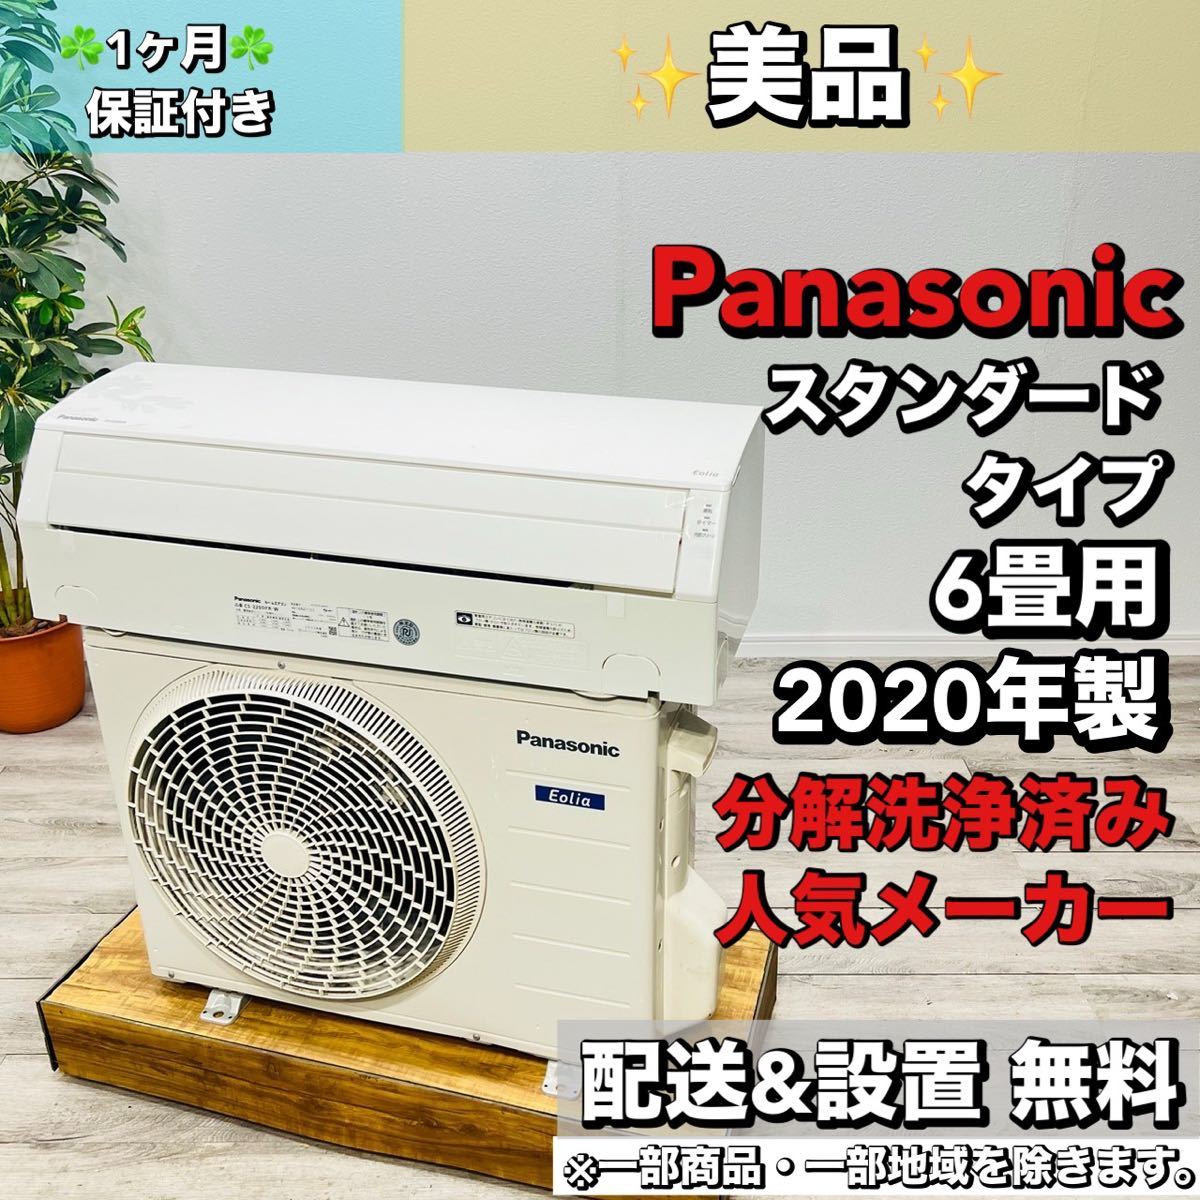 Panasonic a1738 エアコン 6畳用 2020年製 12_画像1